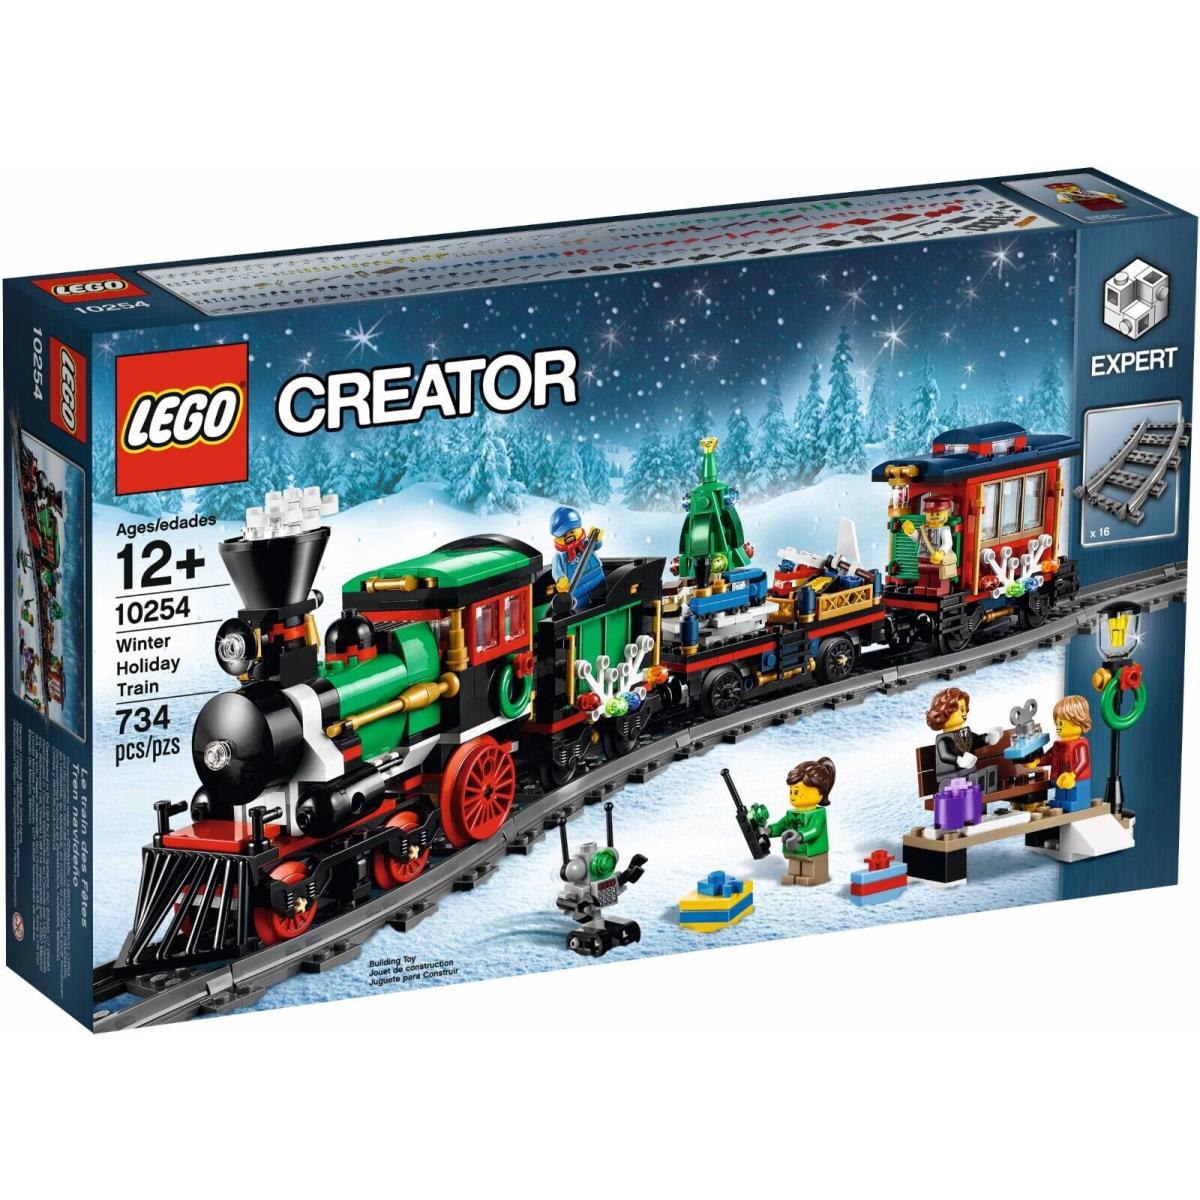 Lego Creator 10254 Winter Holiday Train Christmas Retired Building Set